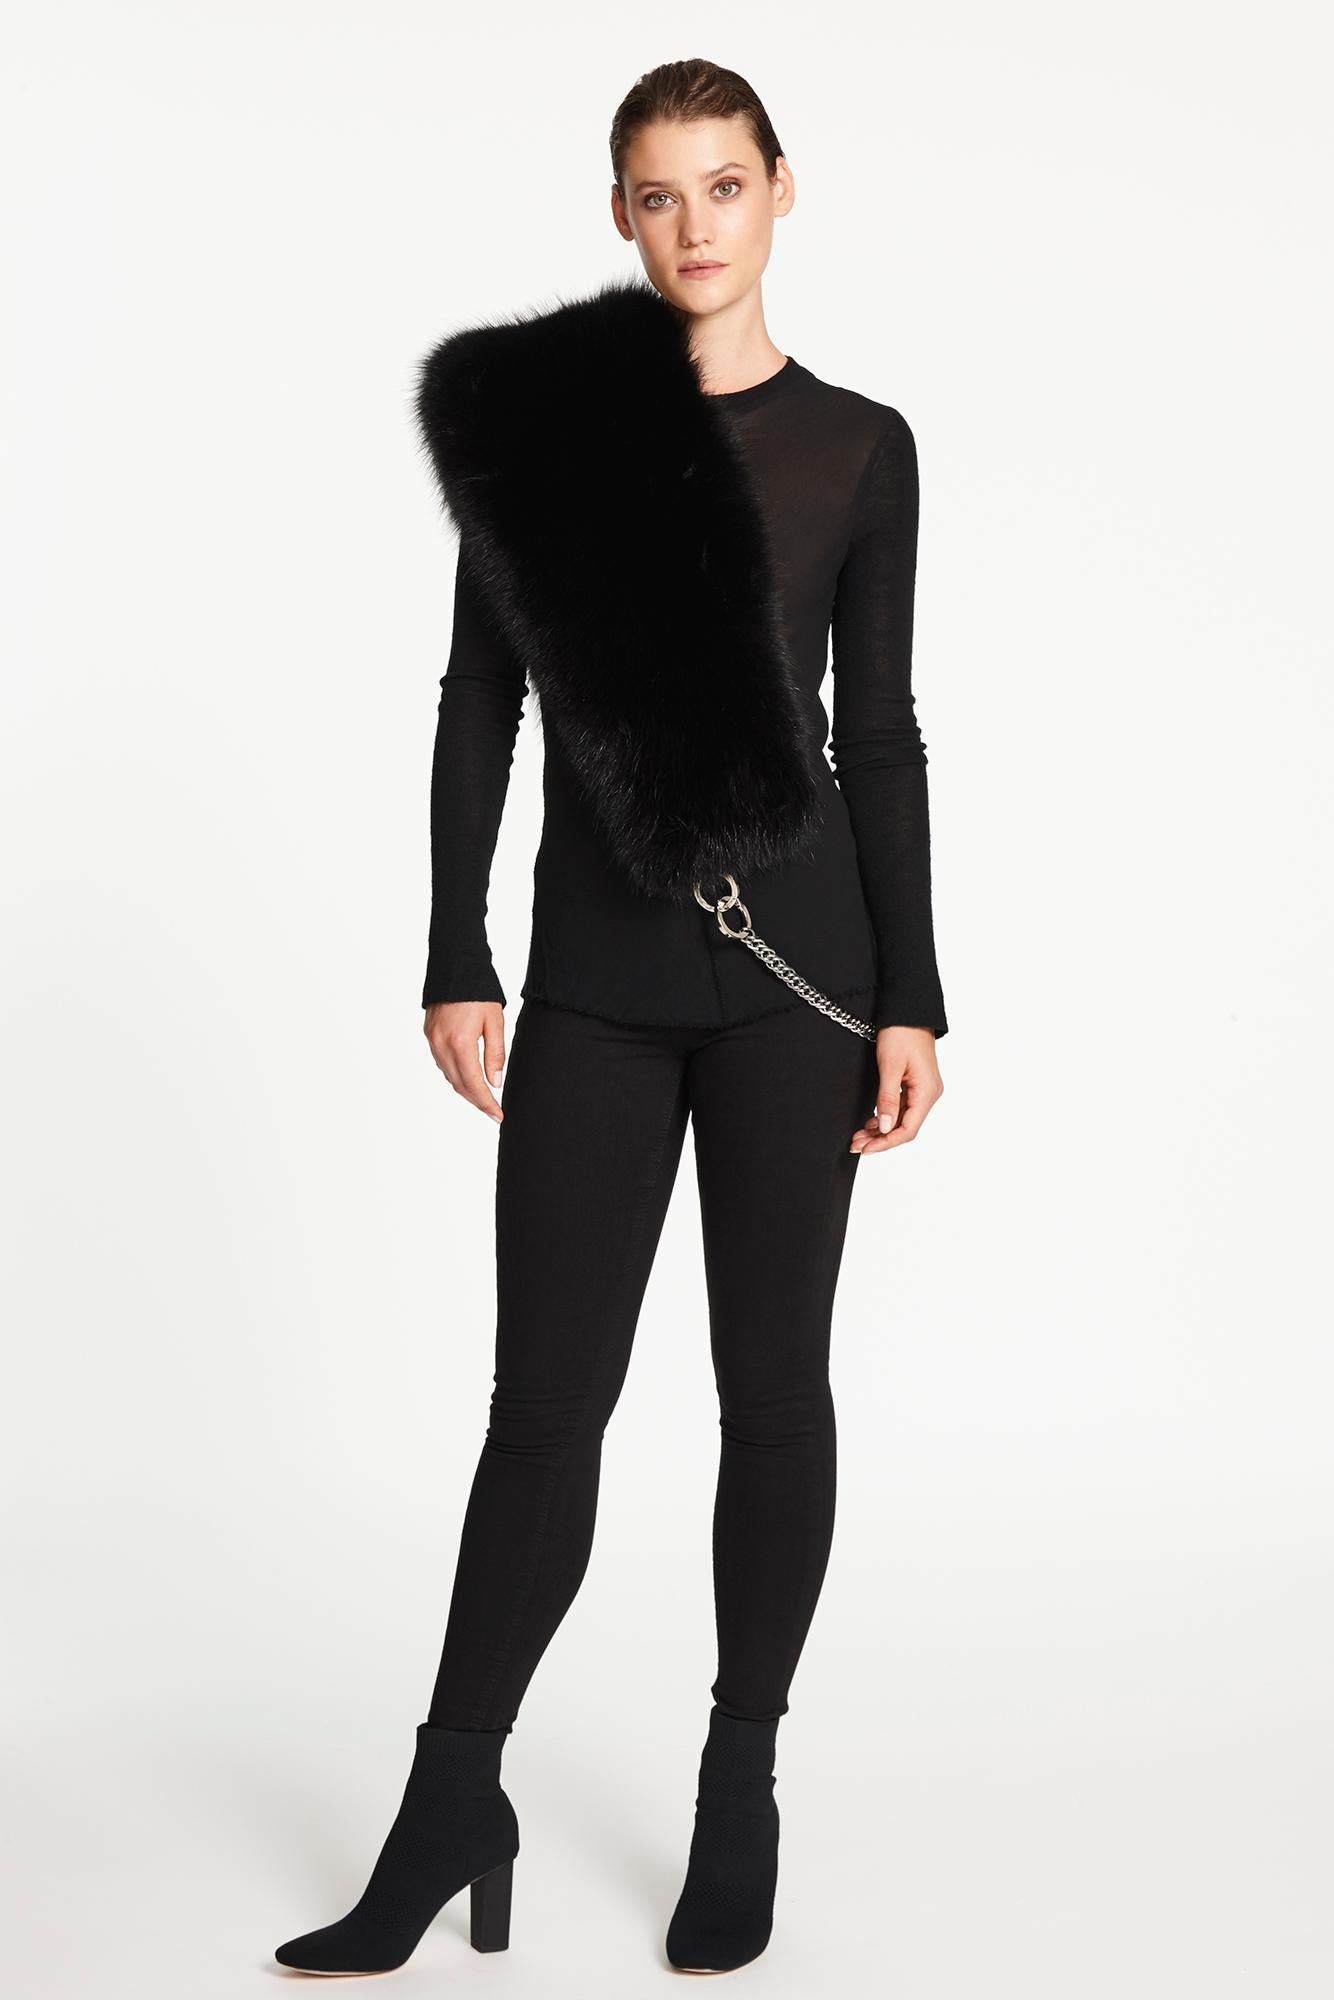 Verheyen London Chained Stole in Black Fox Fur & Silk Lining with Chain - New 3